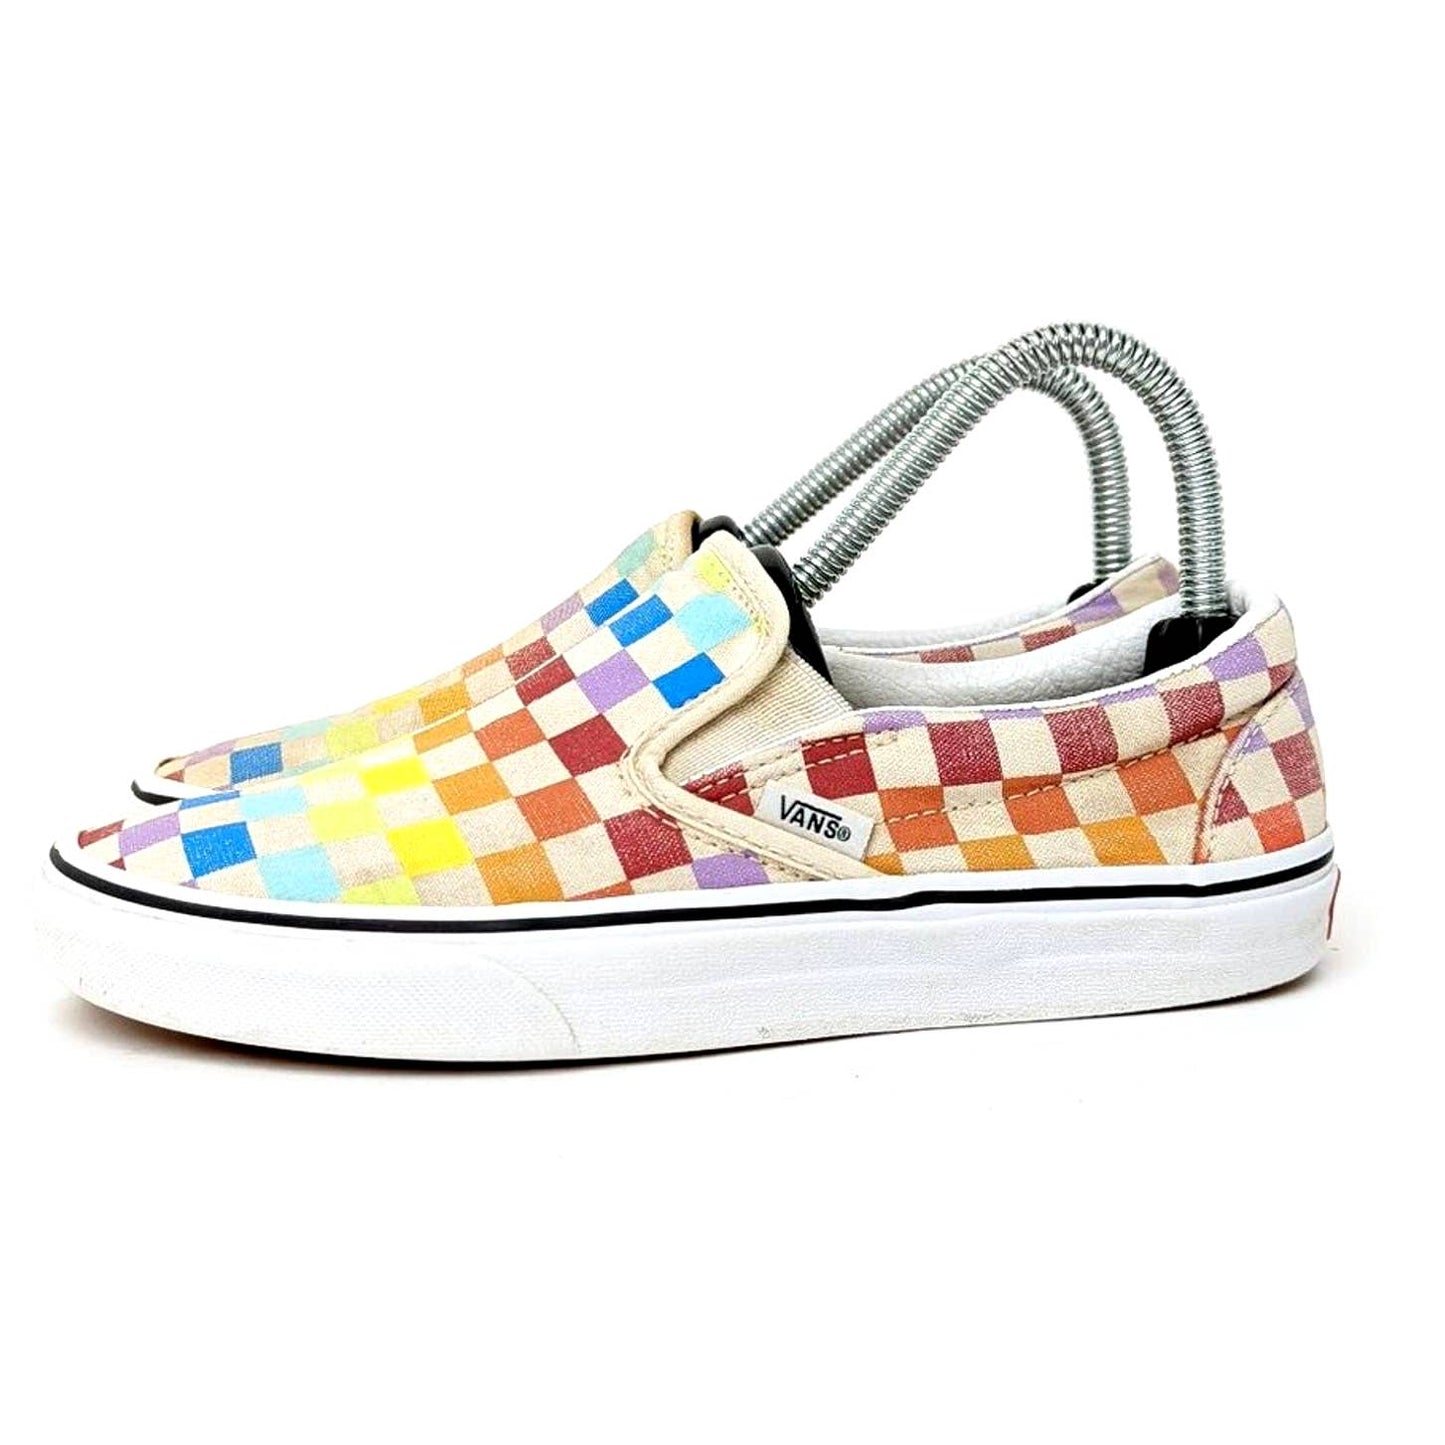 Vans Rainbow Checkered Loafer Slides - 7.5